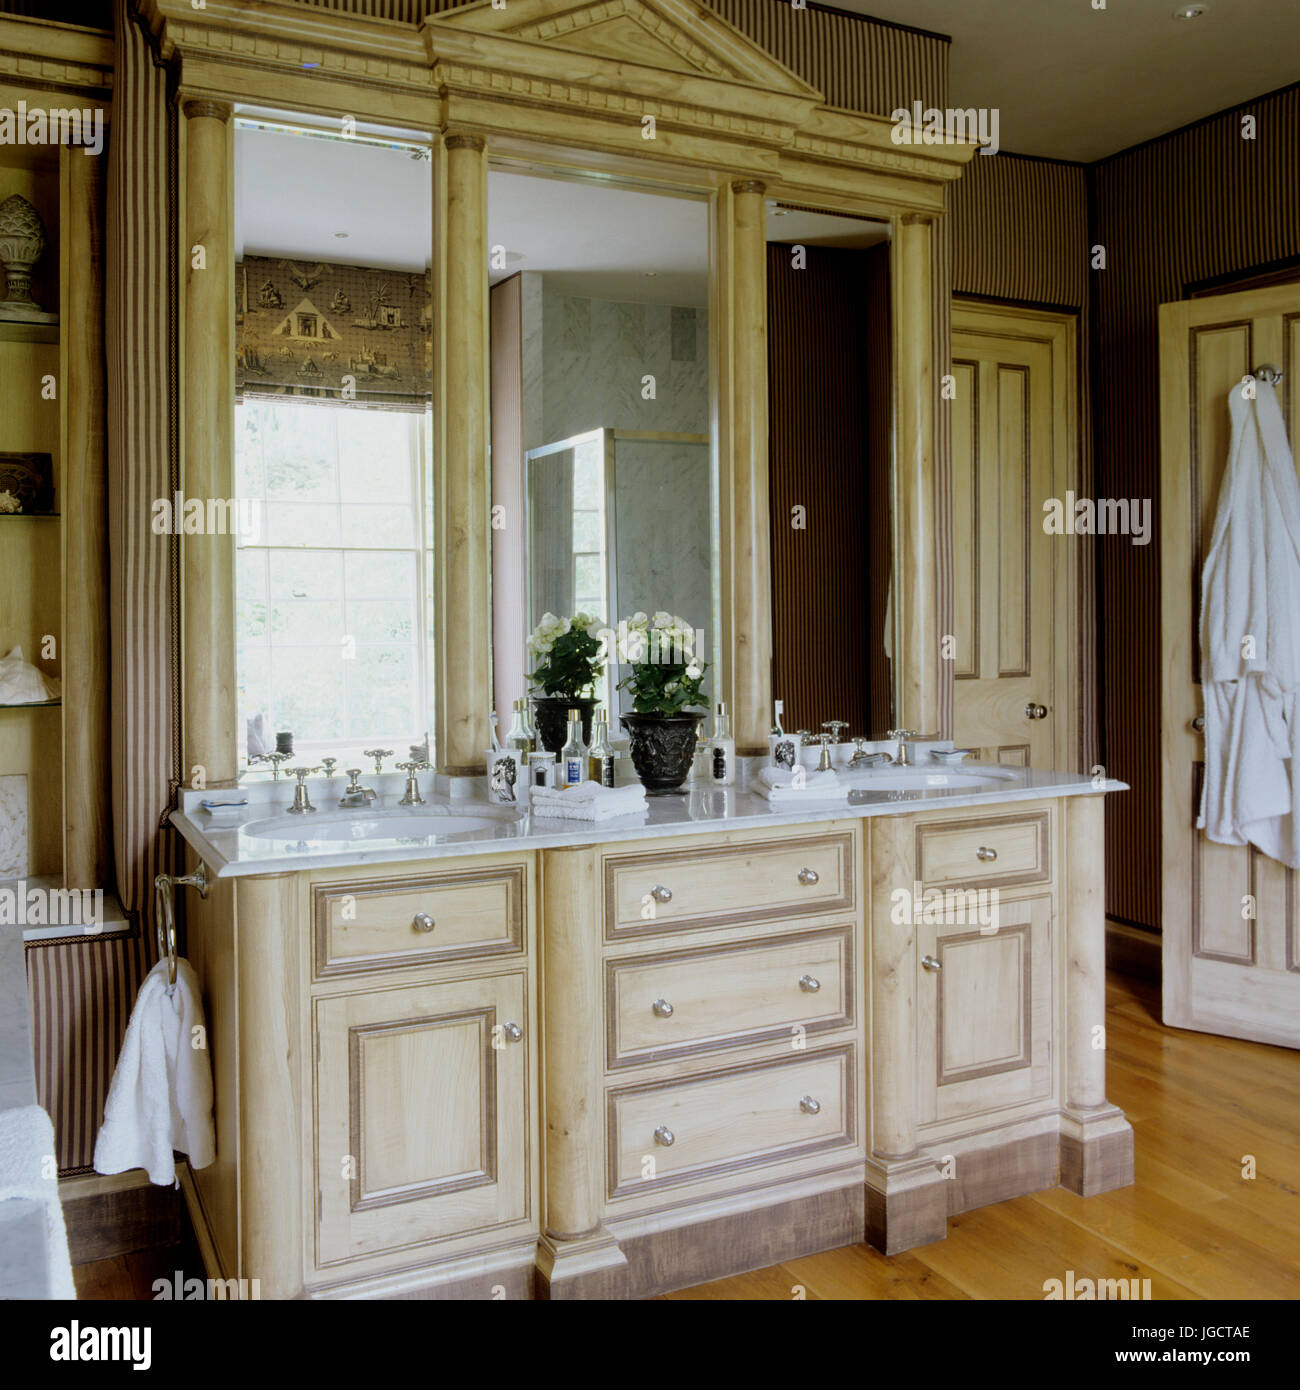 Mirrors above washbasin Stock Photo